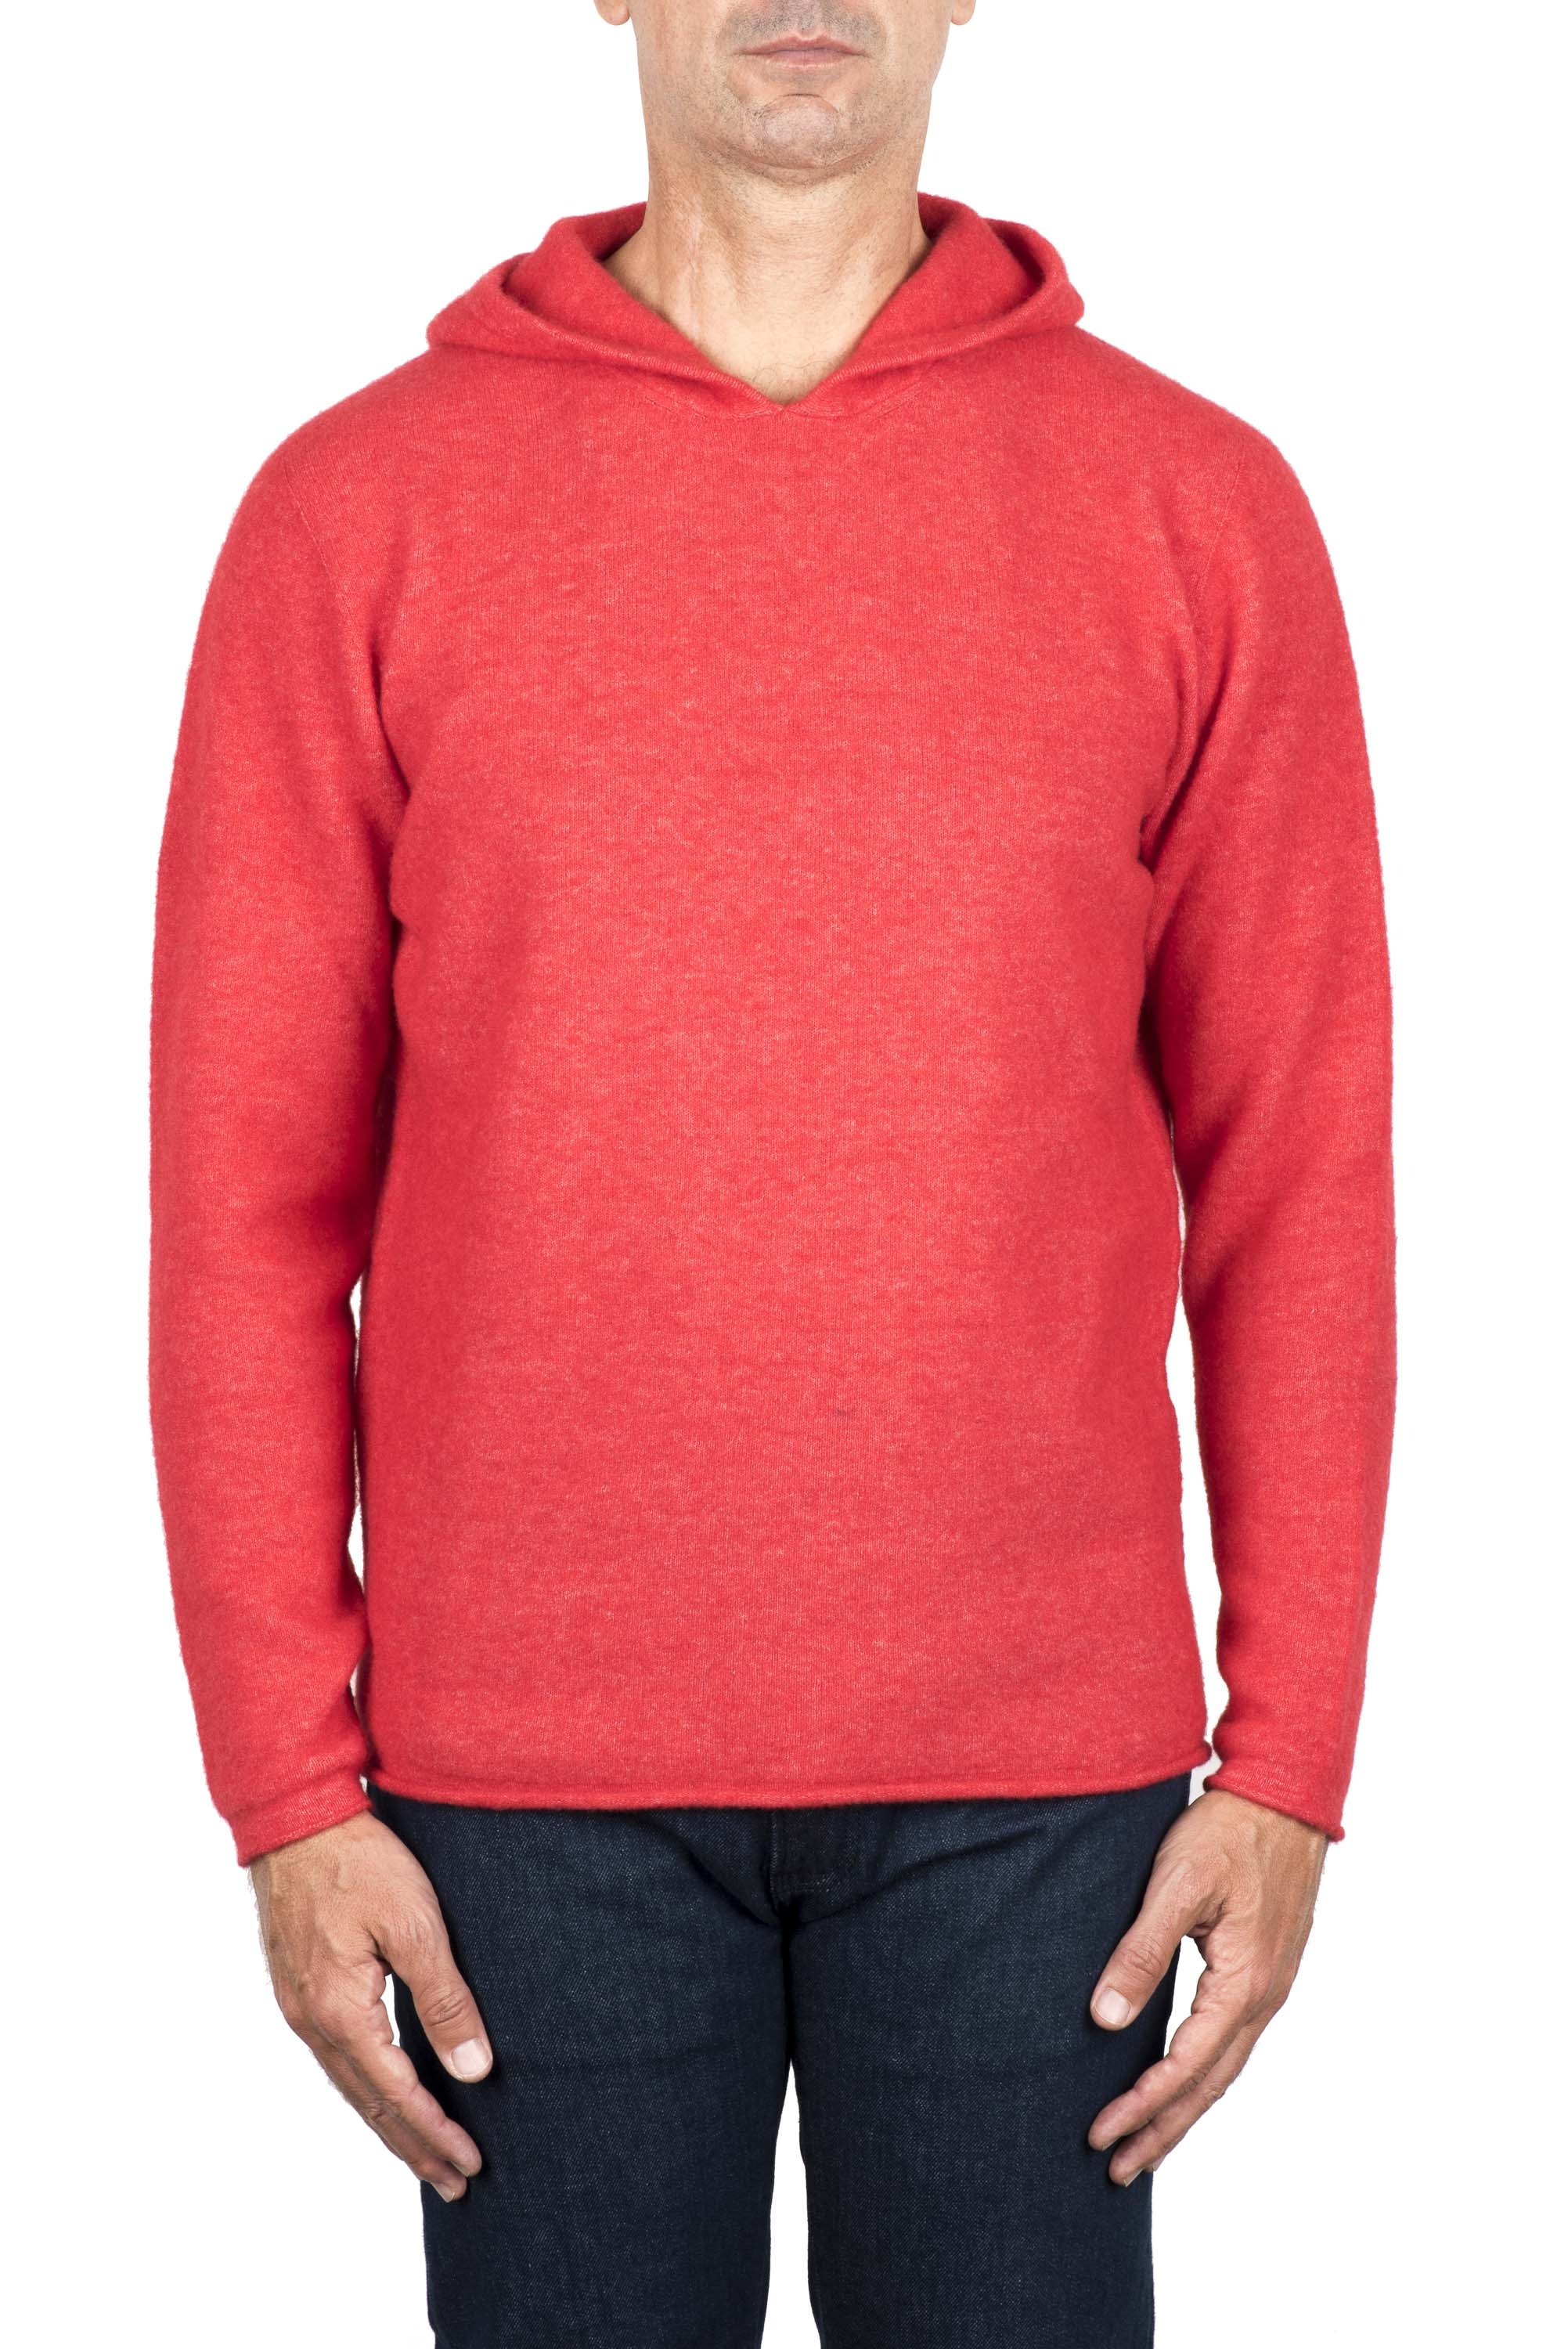 SBU 03520_2021AW Red merino wool blend hooded sweater 01